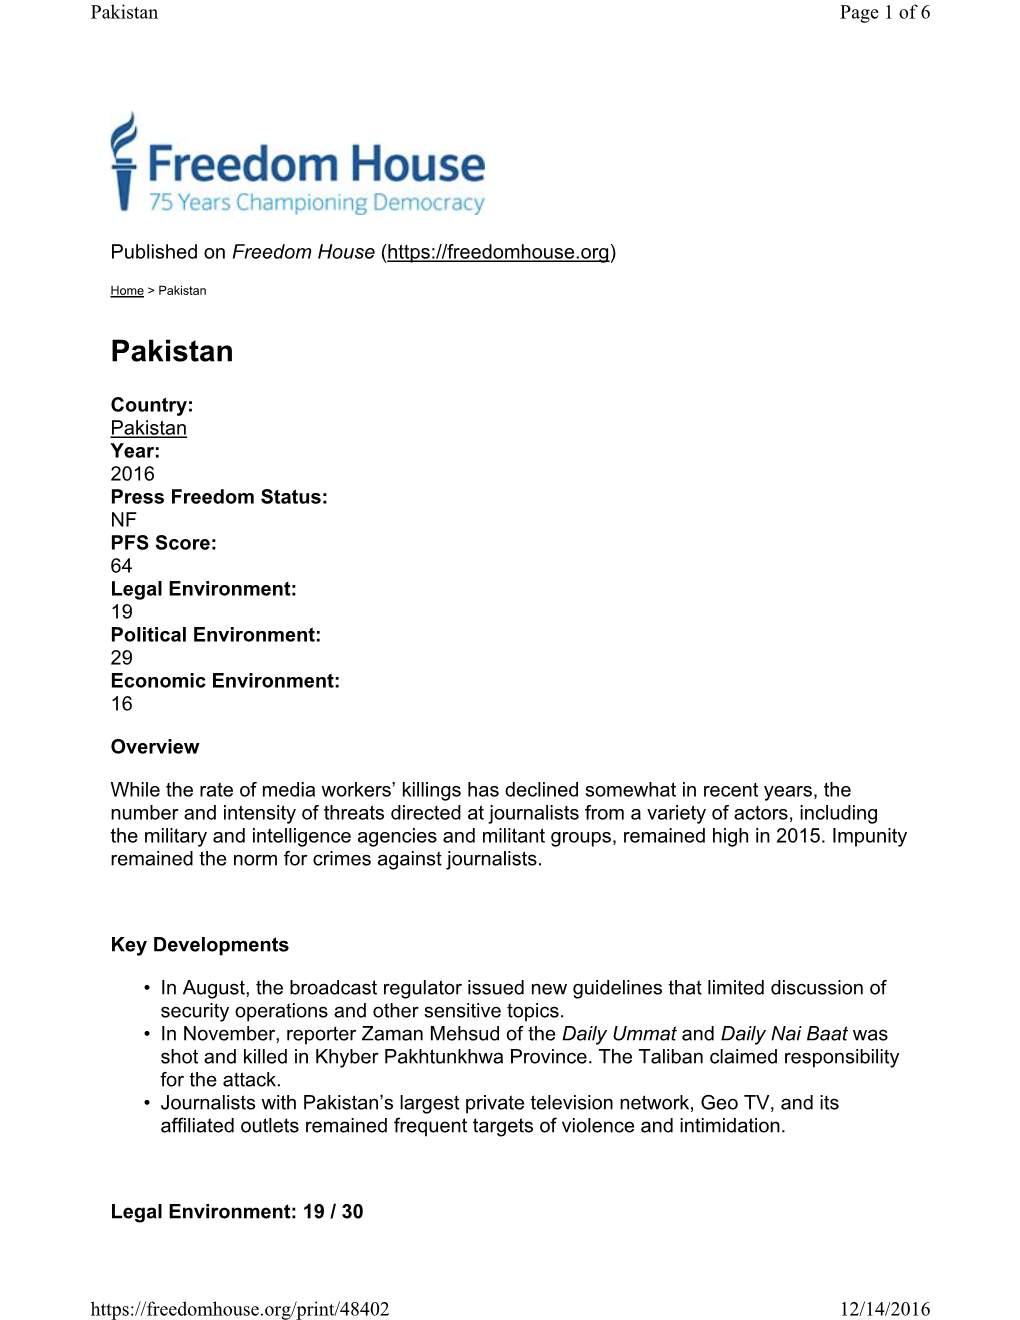 Freedom of the Press 2016 Pakistan